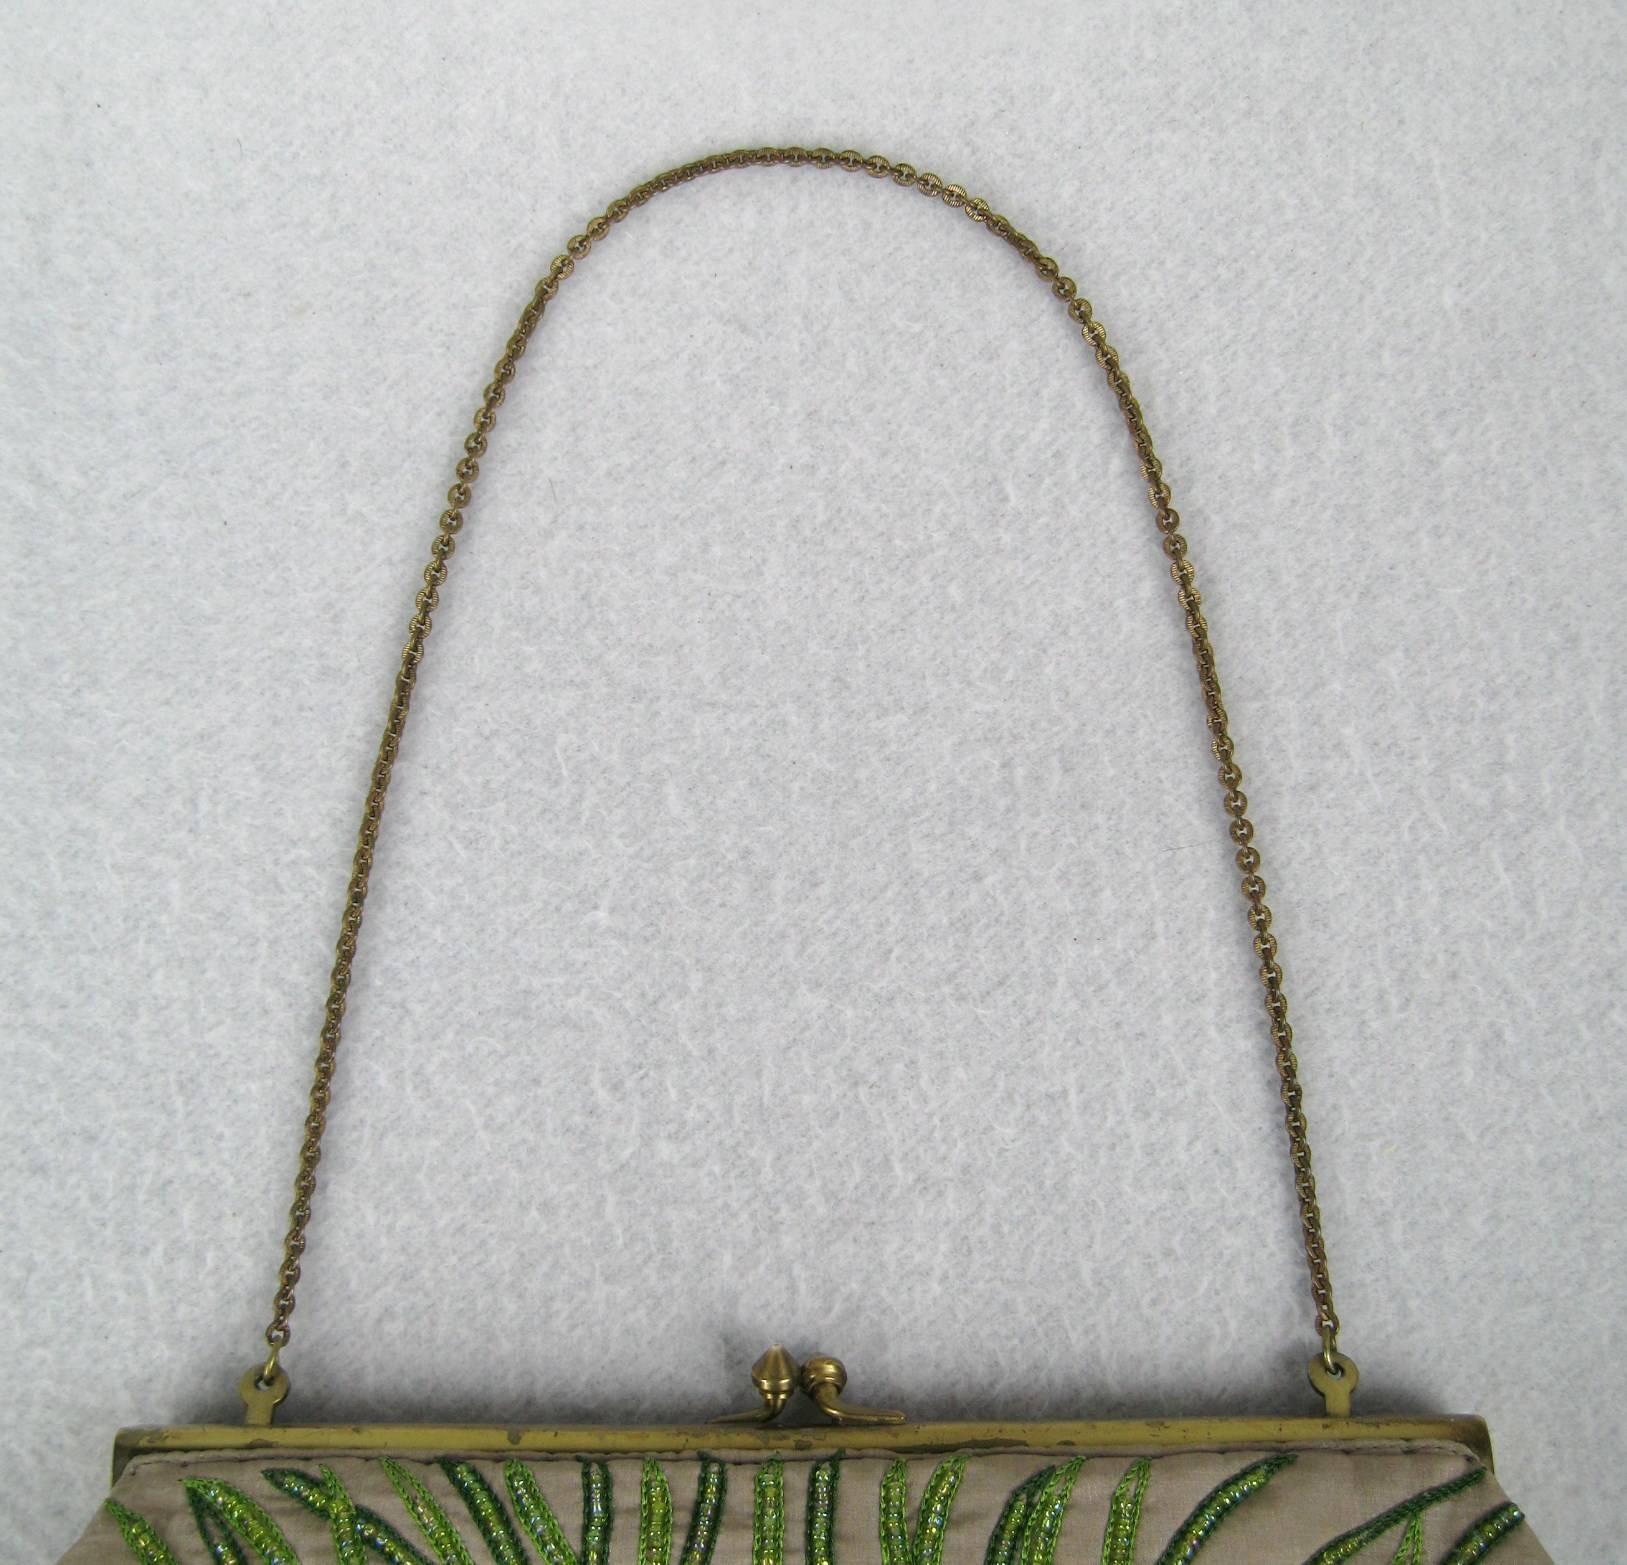 Grün Perlen Art Deco inspirierte Eule Seide Handtasche Clutch  im Angebot 1